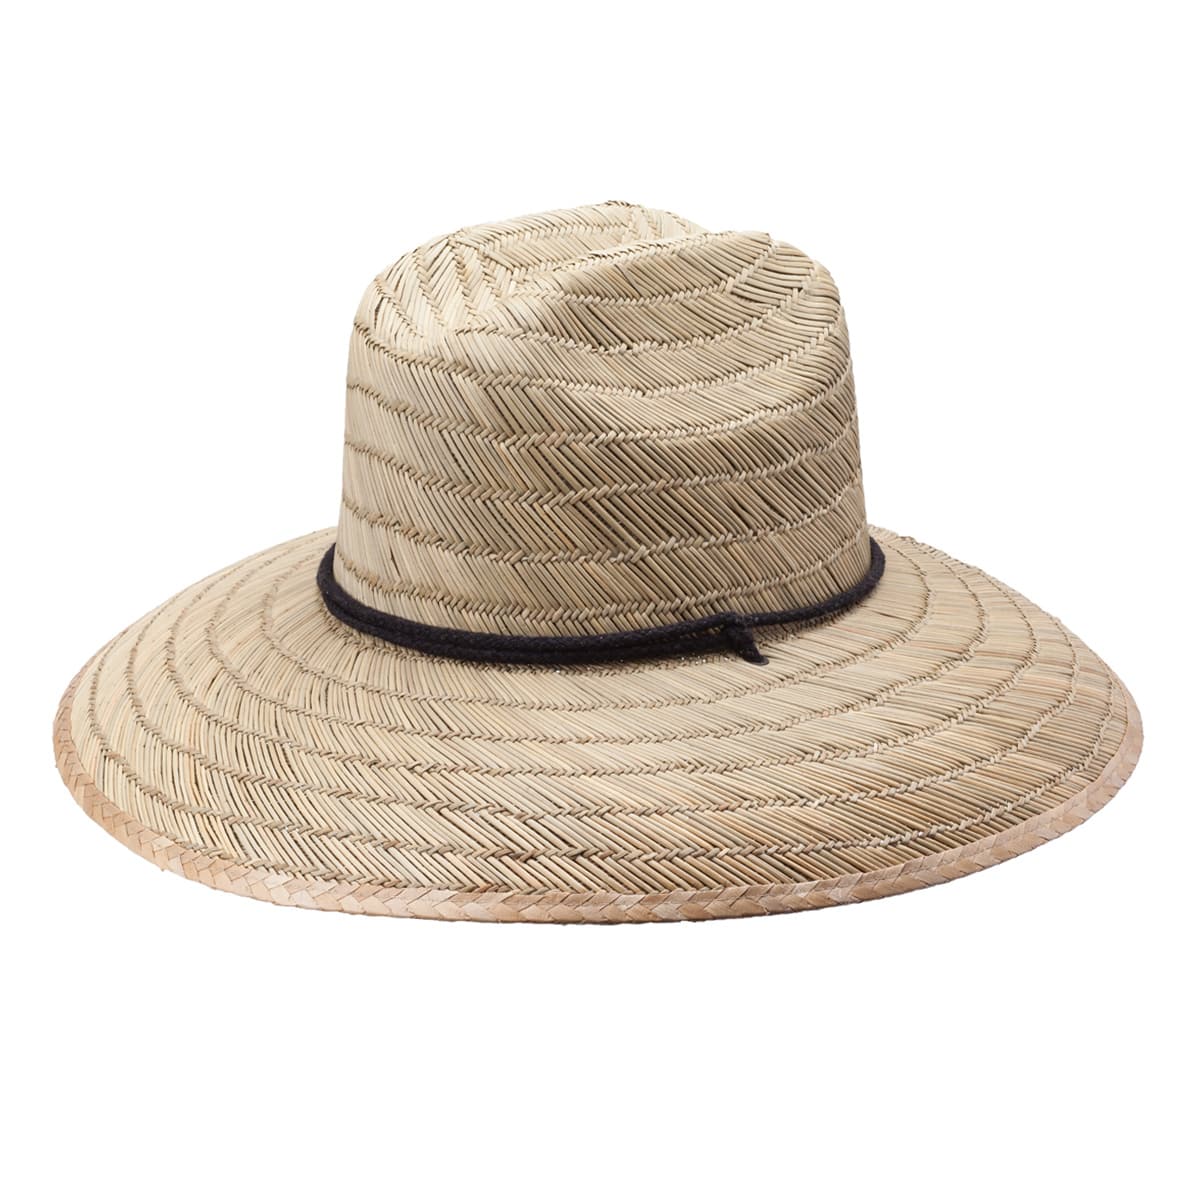 Peter Grimm Costa- 4.75 Inch Brim 100% Straw Lifeguard Hat Dark Brown/Natural